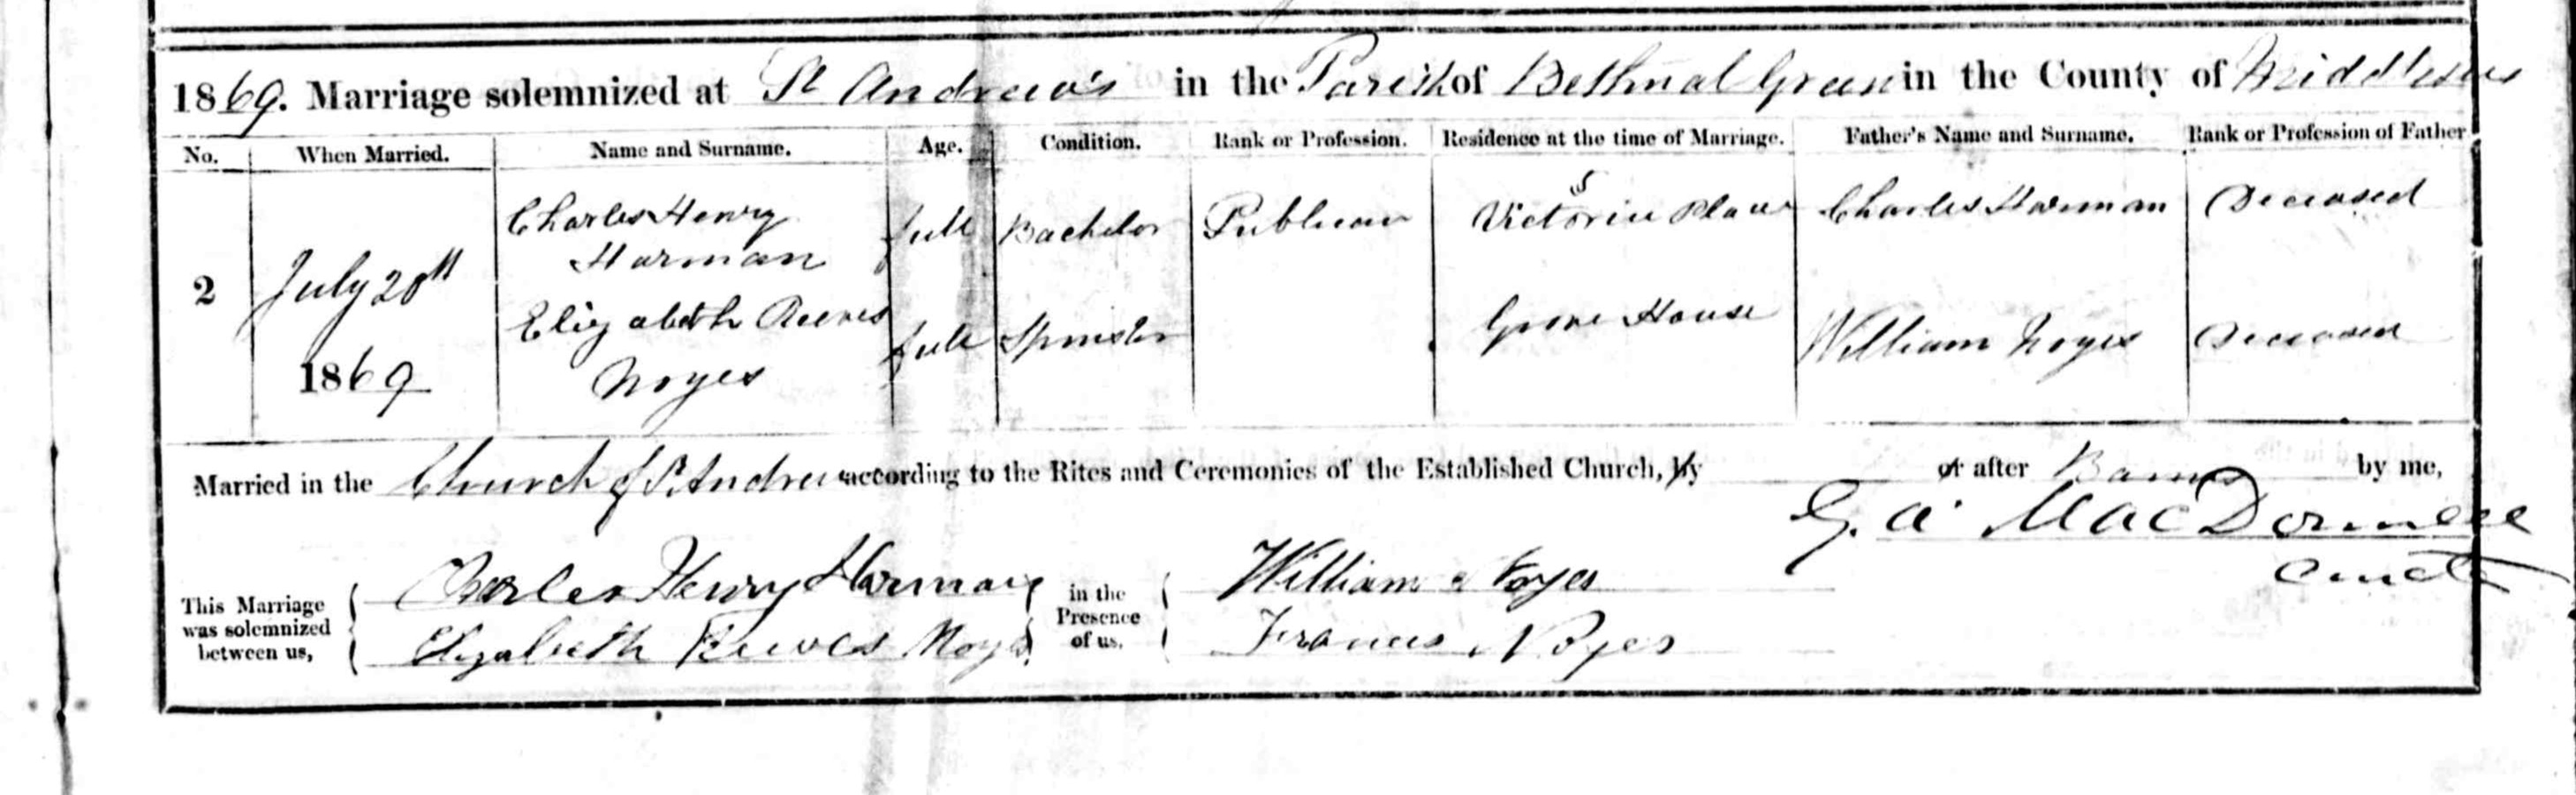 1869 marriage of Elizabeth Reeves Noyes to Charles Henry Harman